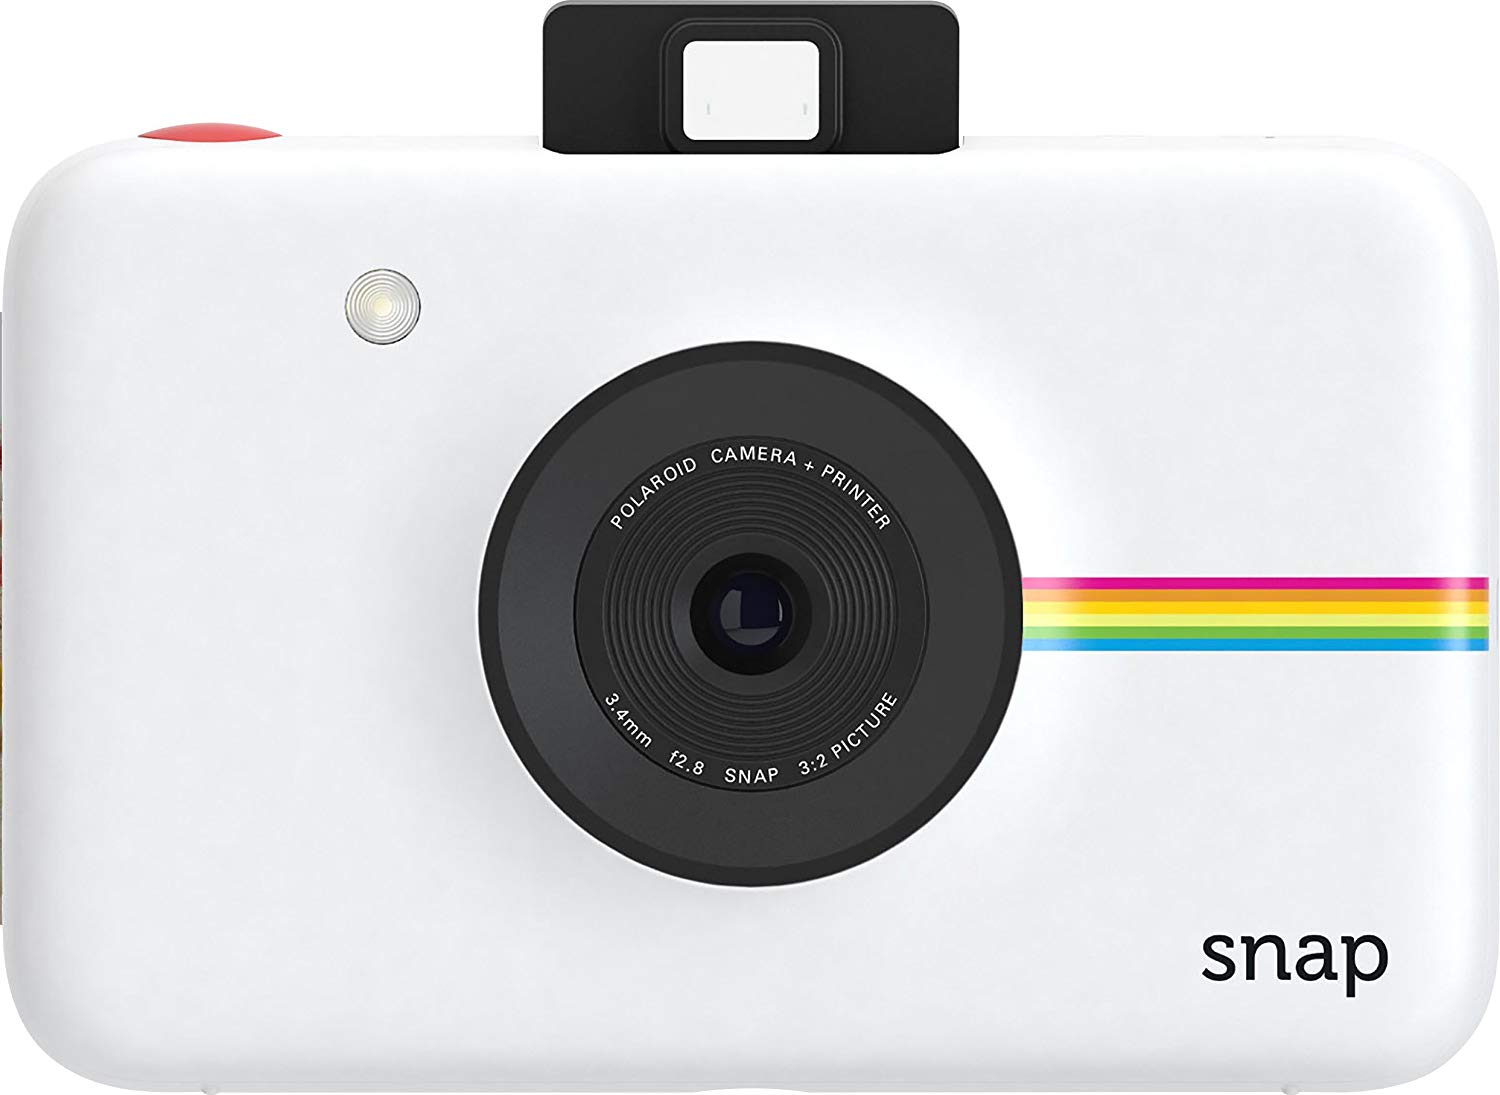 White Polaroid Snap instant camera product shot